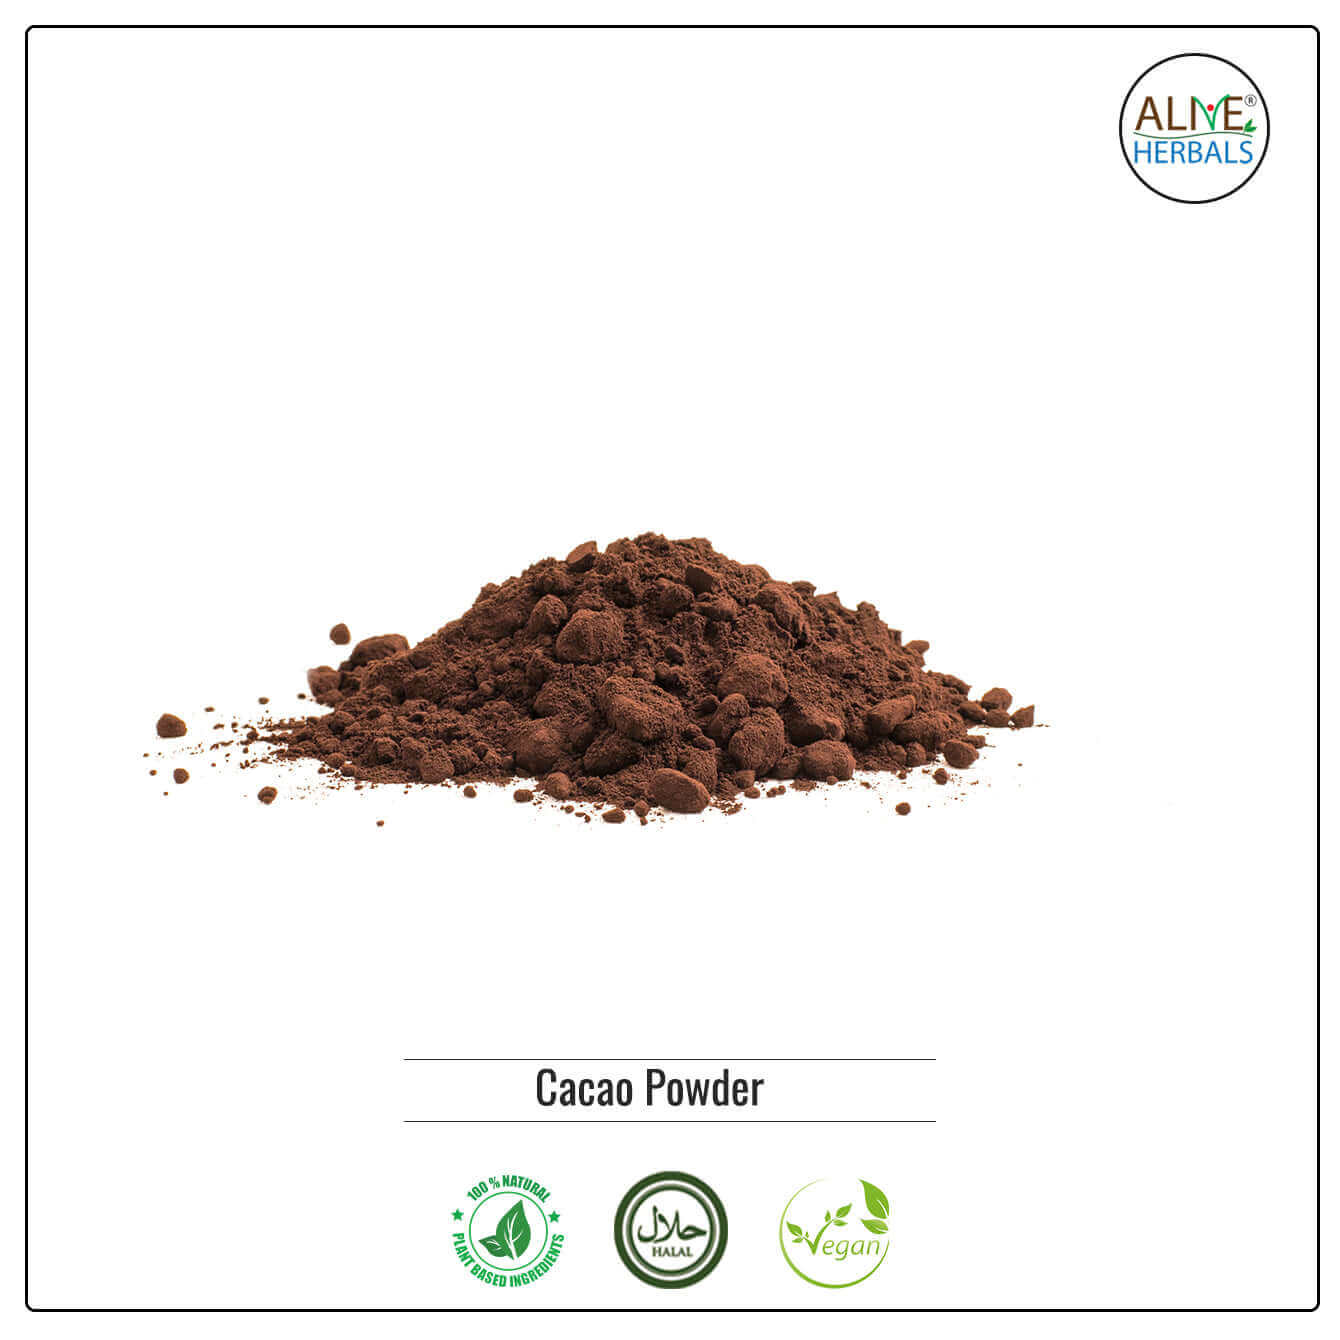 Cacao Powder - Shop at Natural Food Store | Alive Herbals.